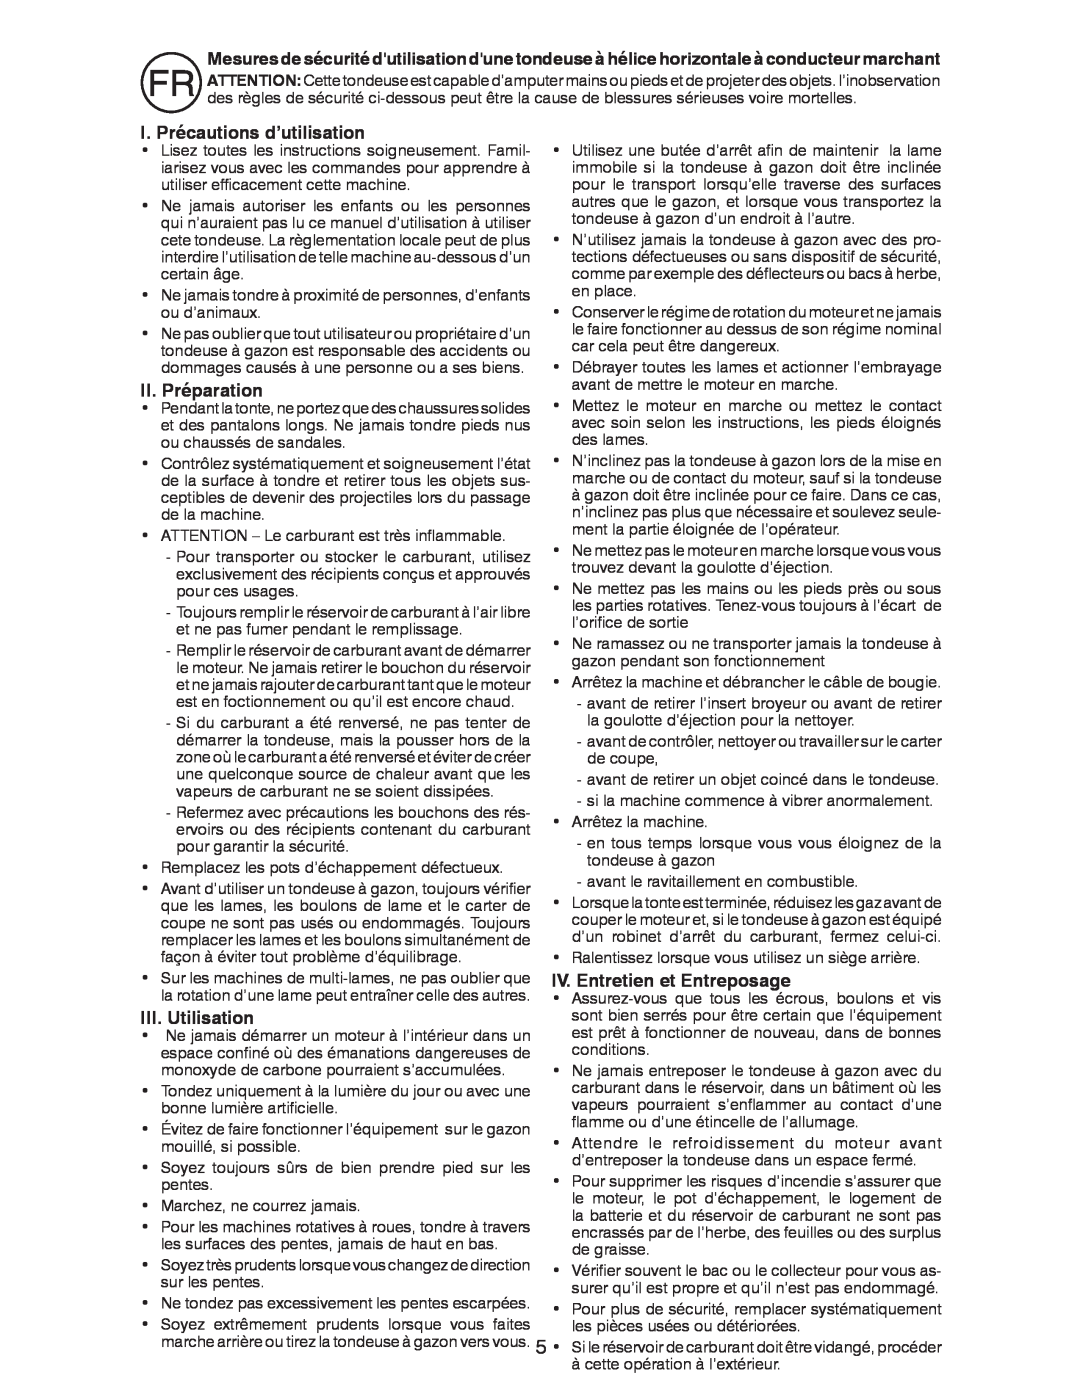 Husqvarna J 55L instruction manual I. Précautions d’utilisation, II. Préparation, III. Utilisation 